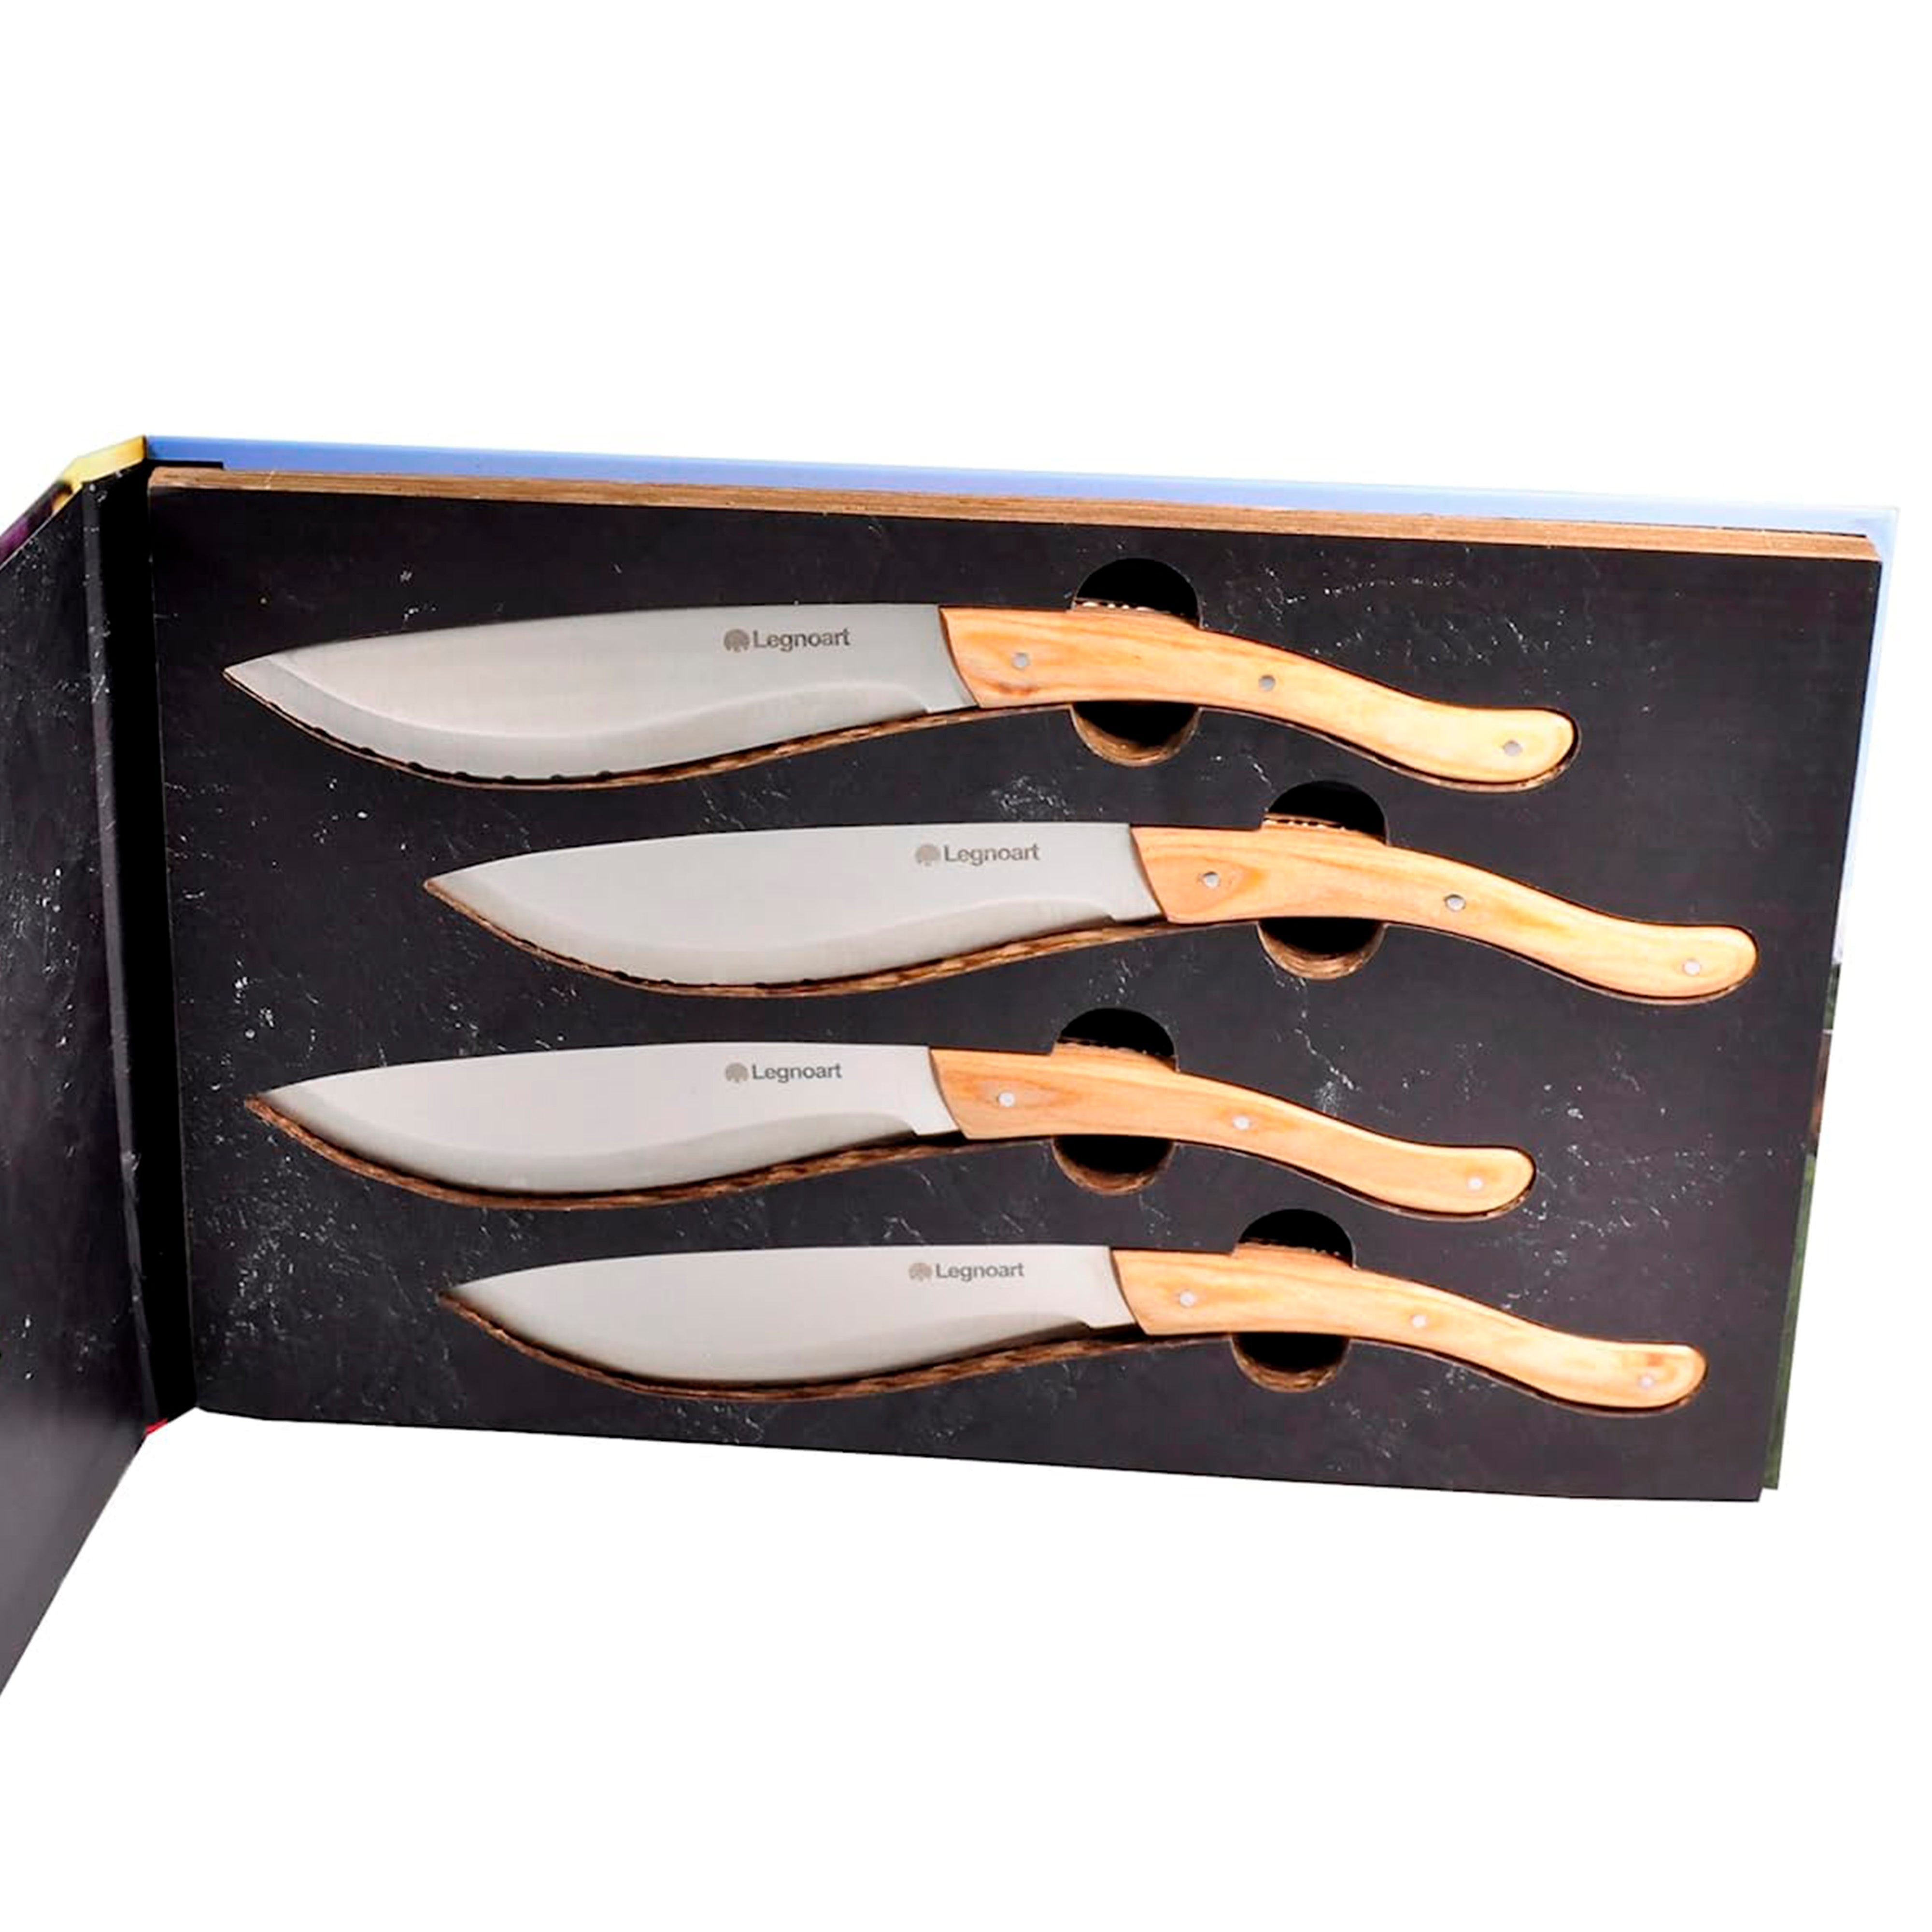 Legnoart Sirloin 4-Piece Steak Knife Set with Light Wood Handle